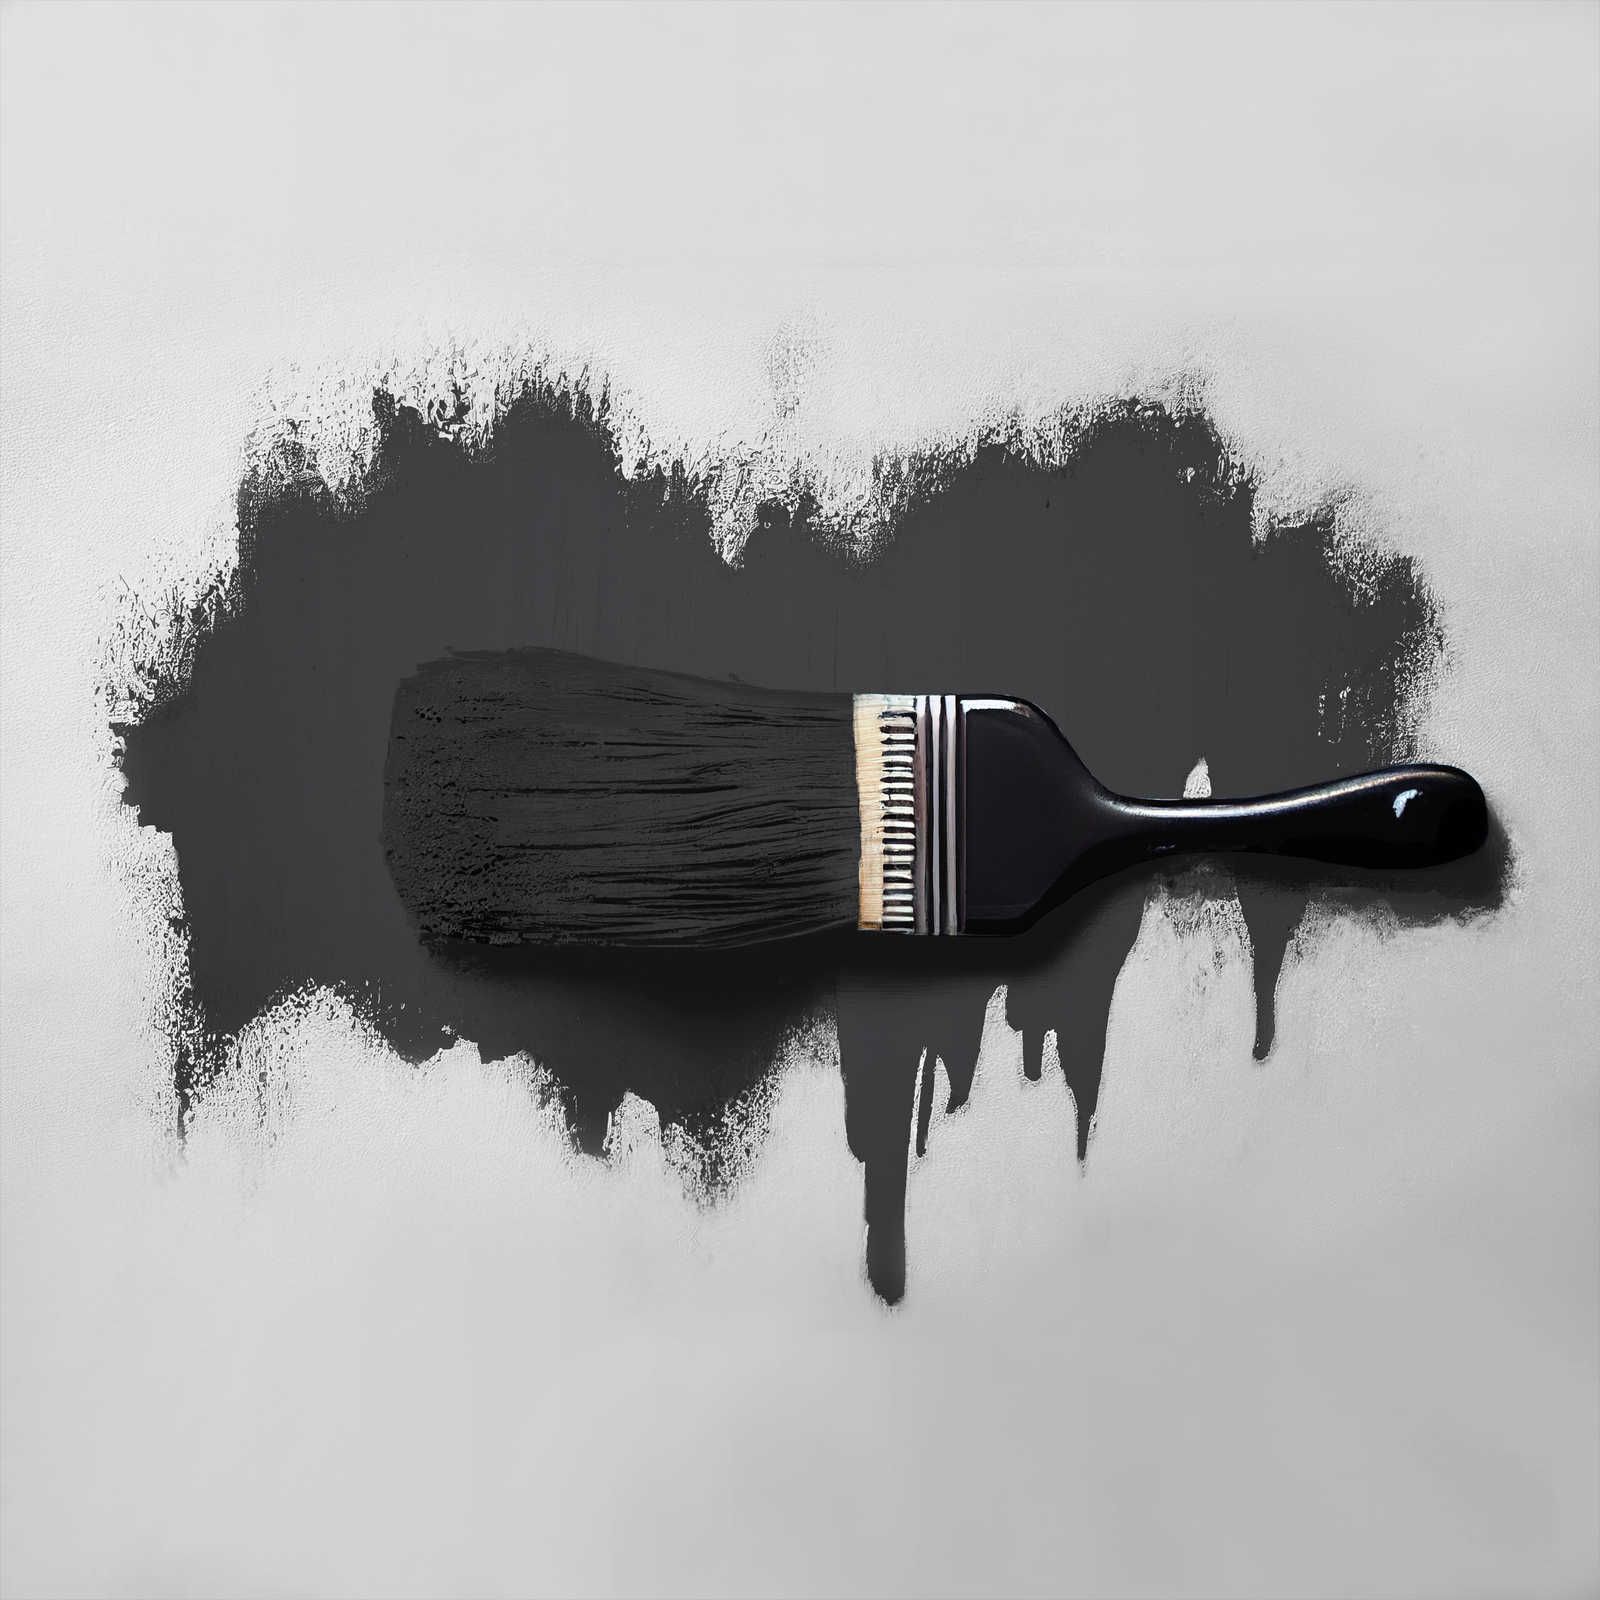             Pittura murale TCK1007 »Casual Caviar« in nero elegante – 5,0 litri
        